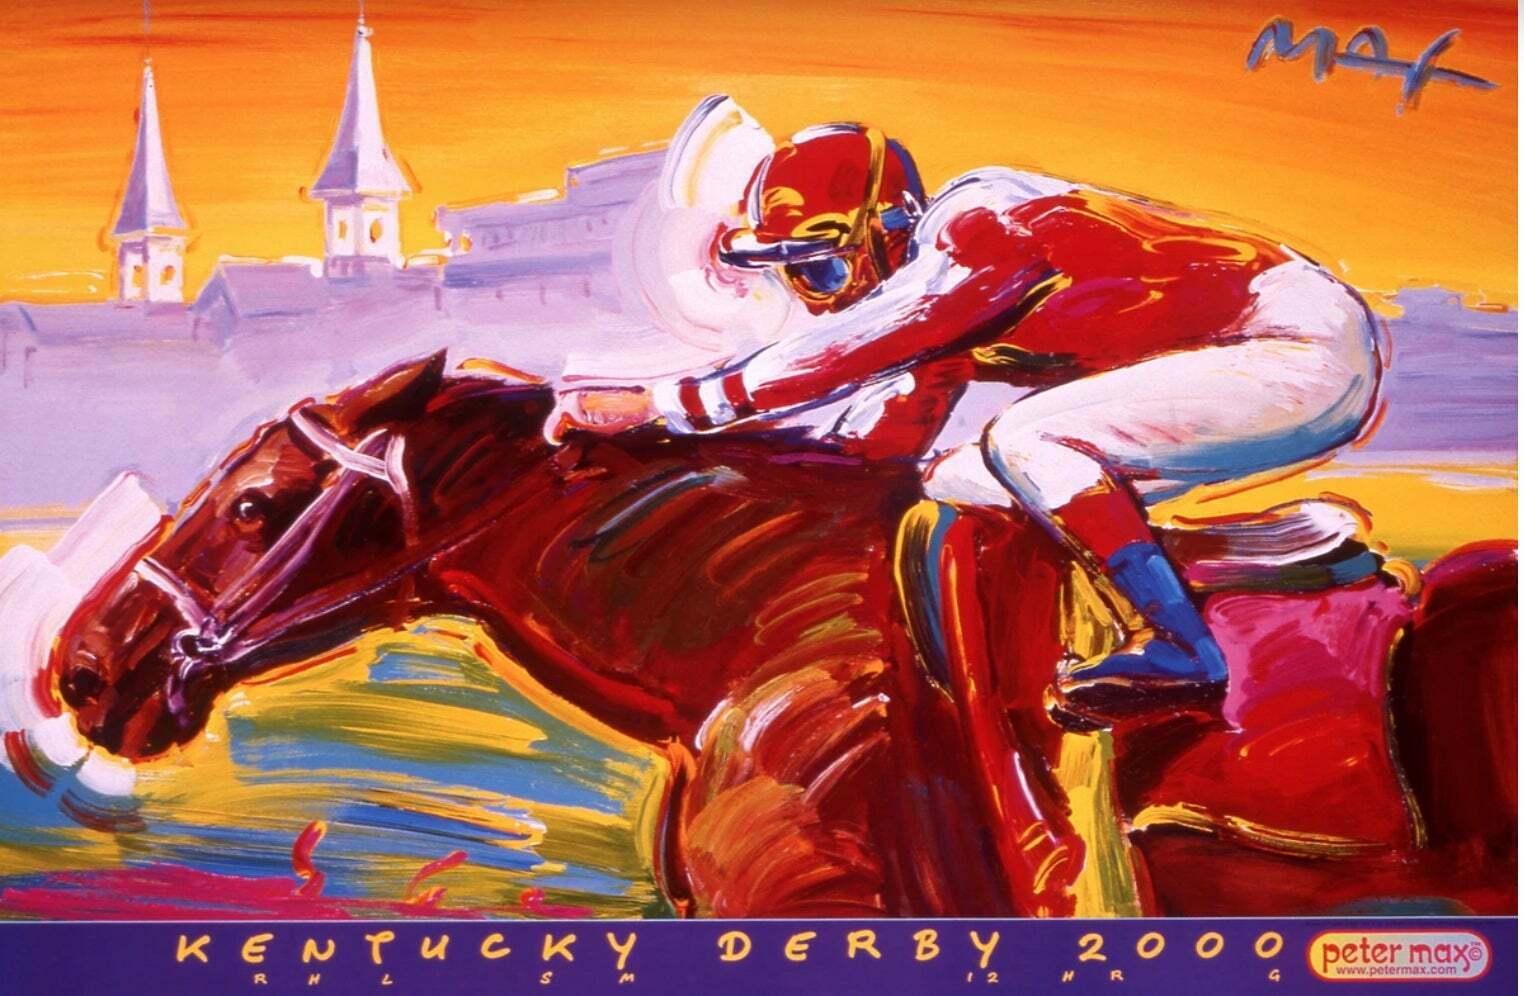 Kentucky Derby, 2000 Event Offset Lithograph -SIGNED